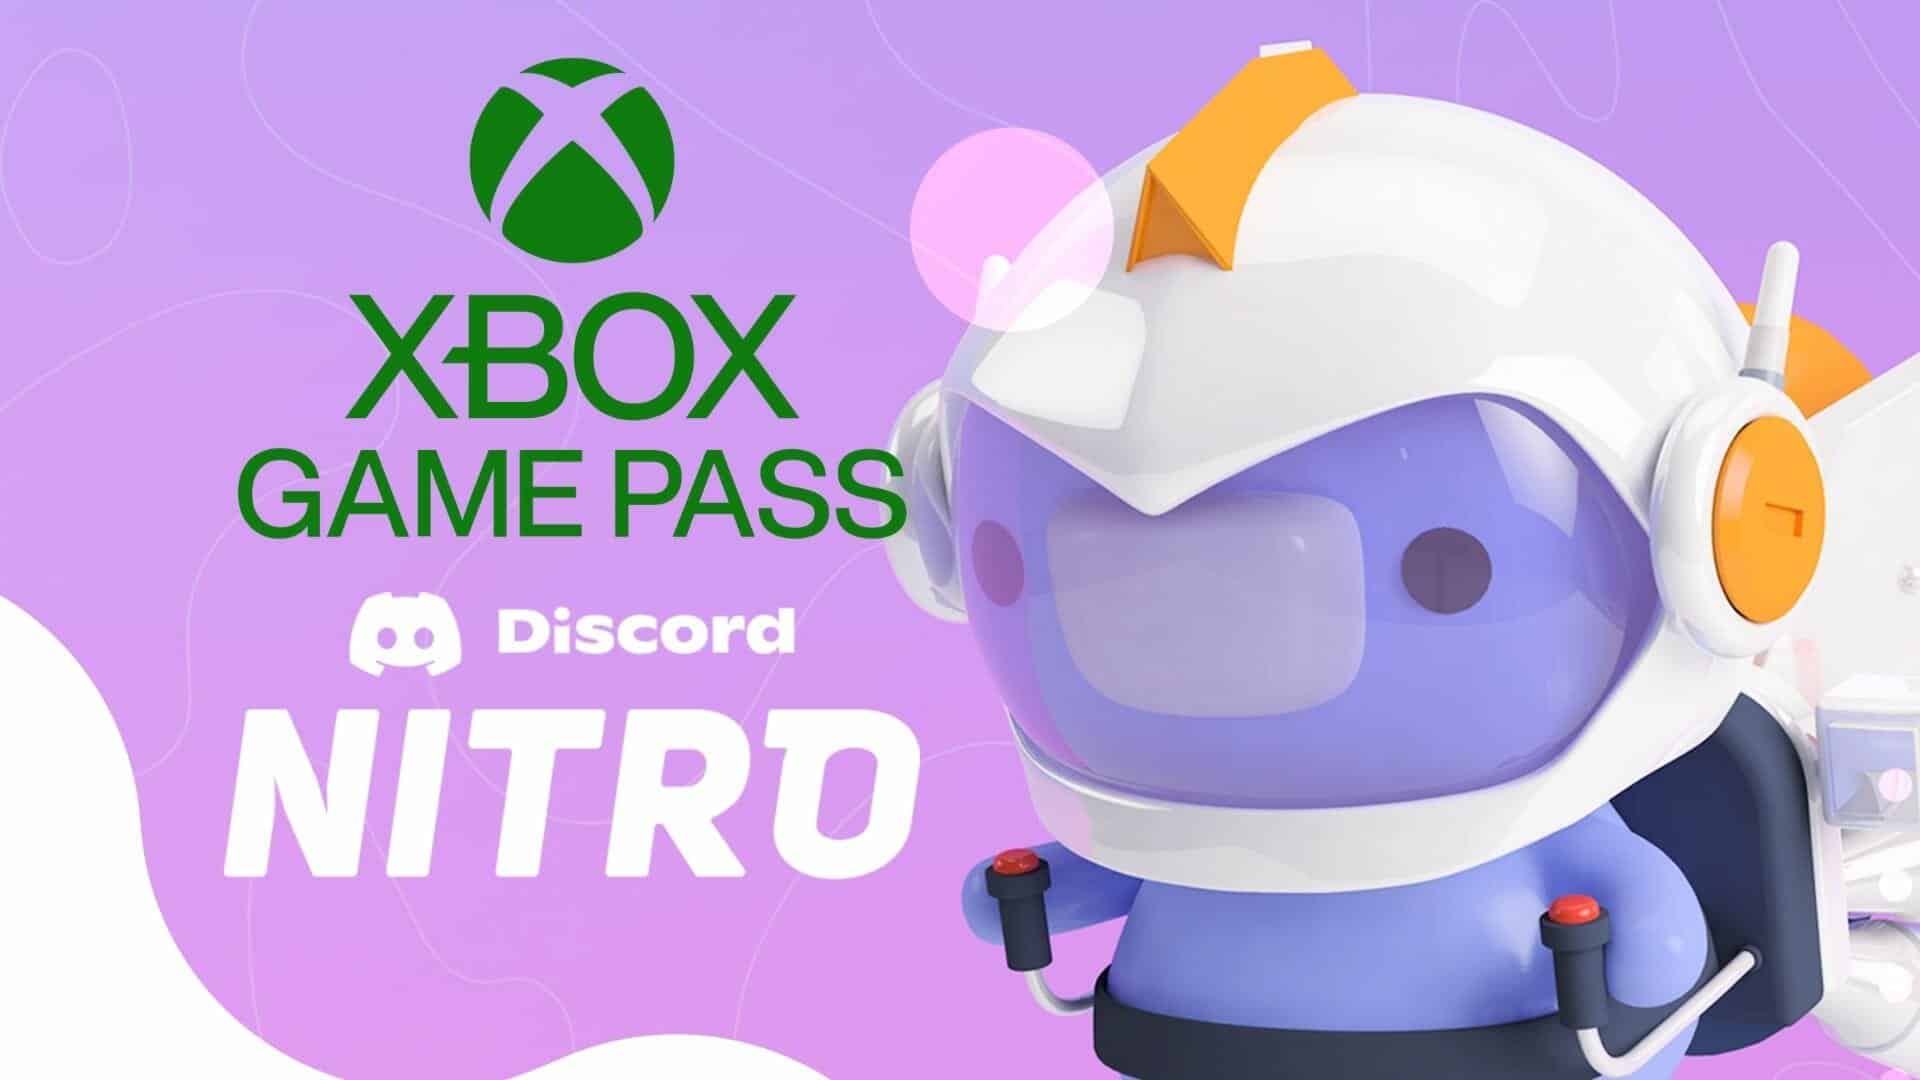 xbox game pass and discord logos